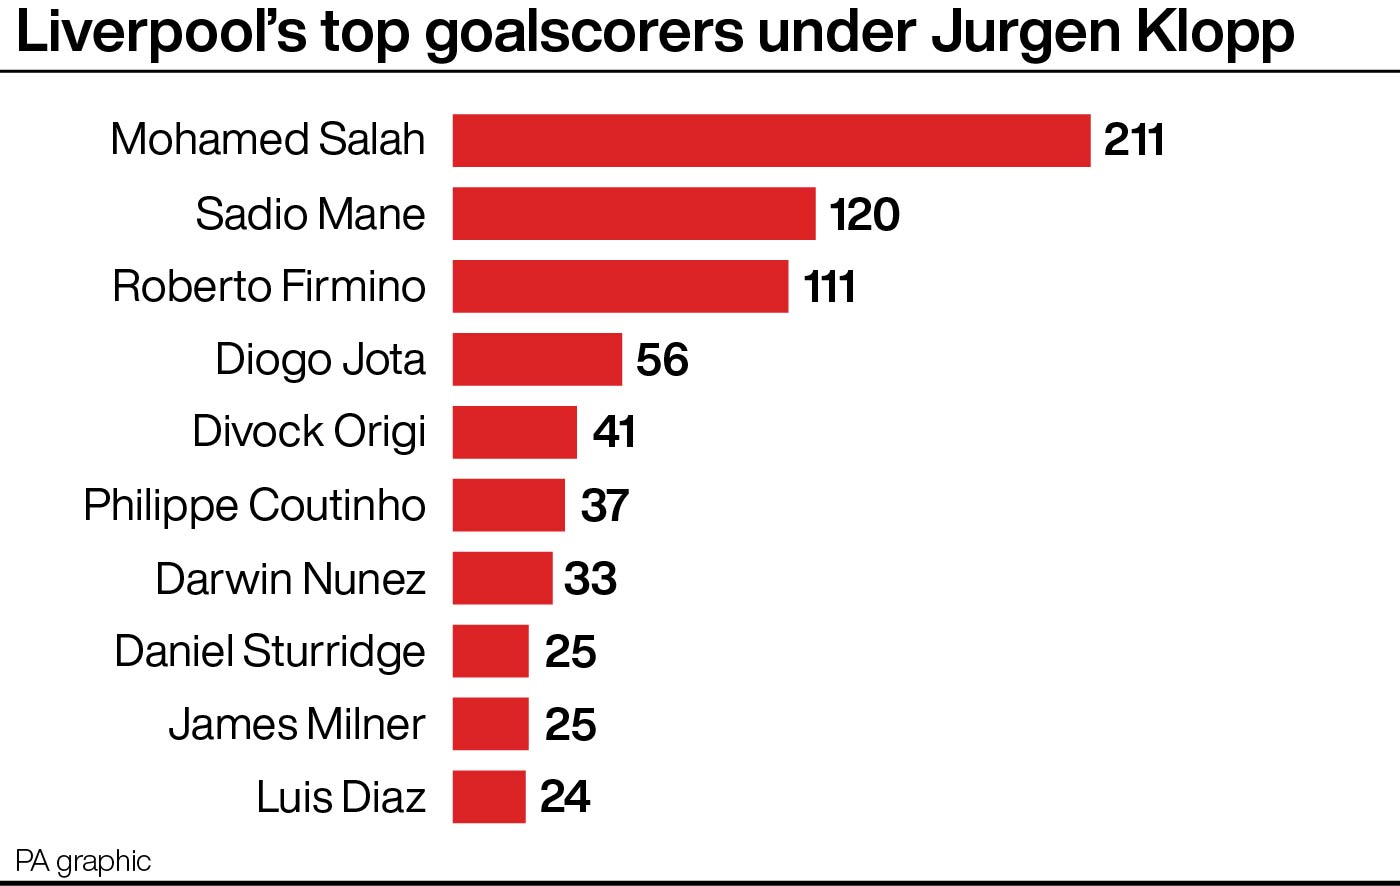 Graphic showing Liverpool's top 10 goalscorers under Jurgen Klopp